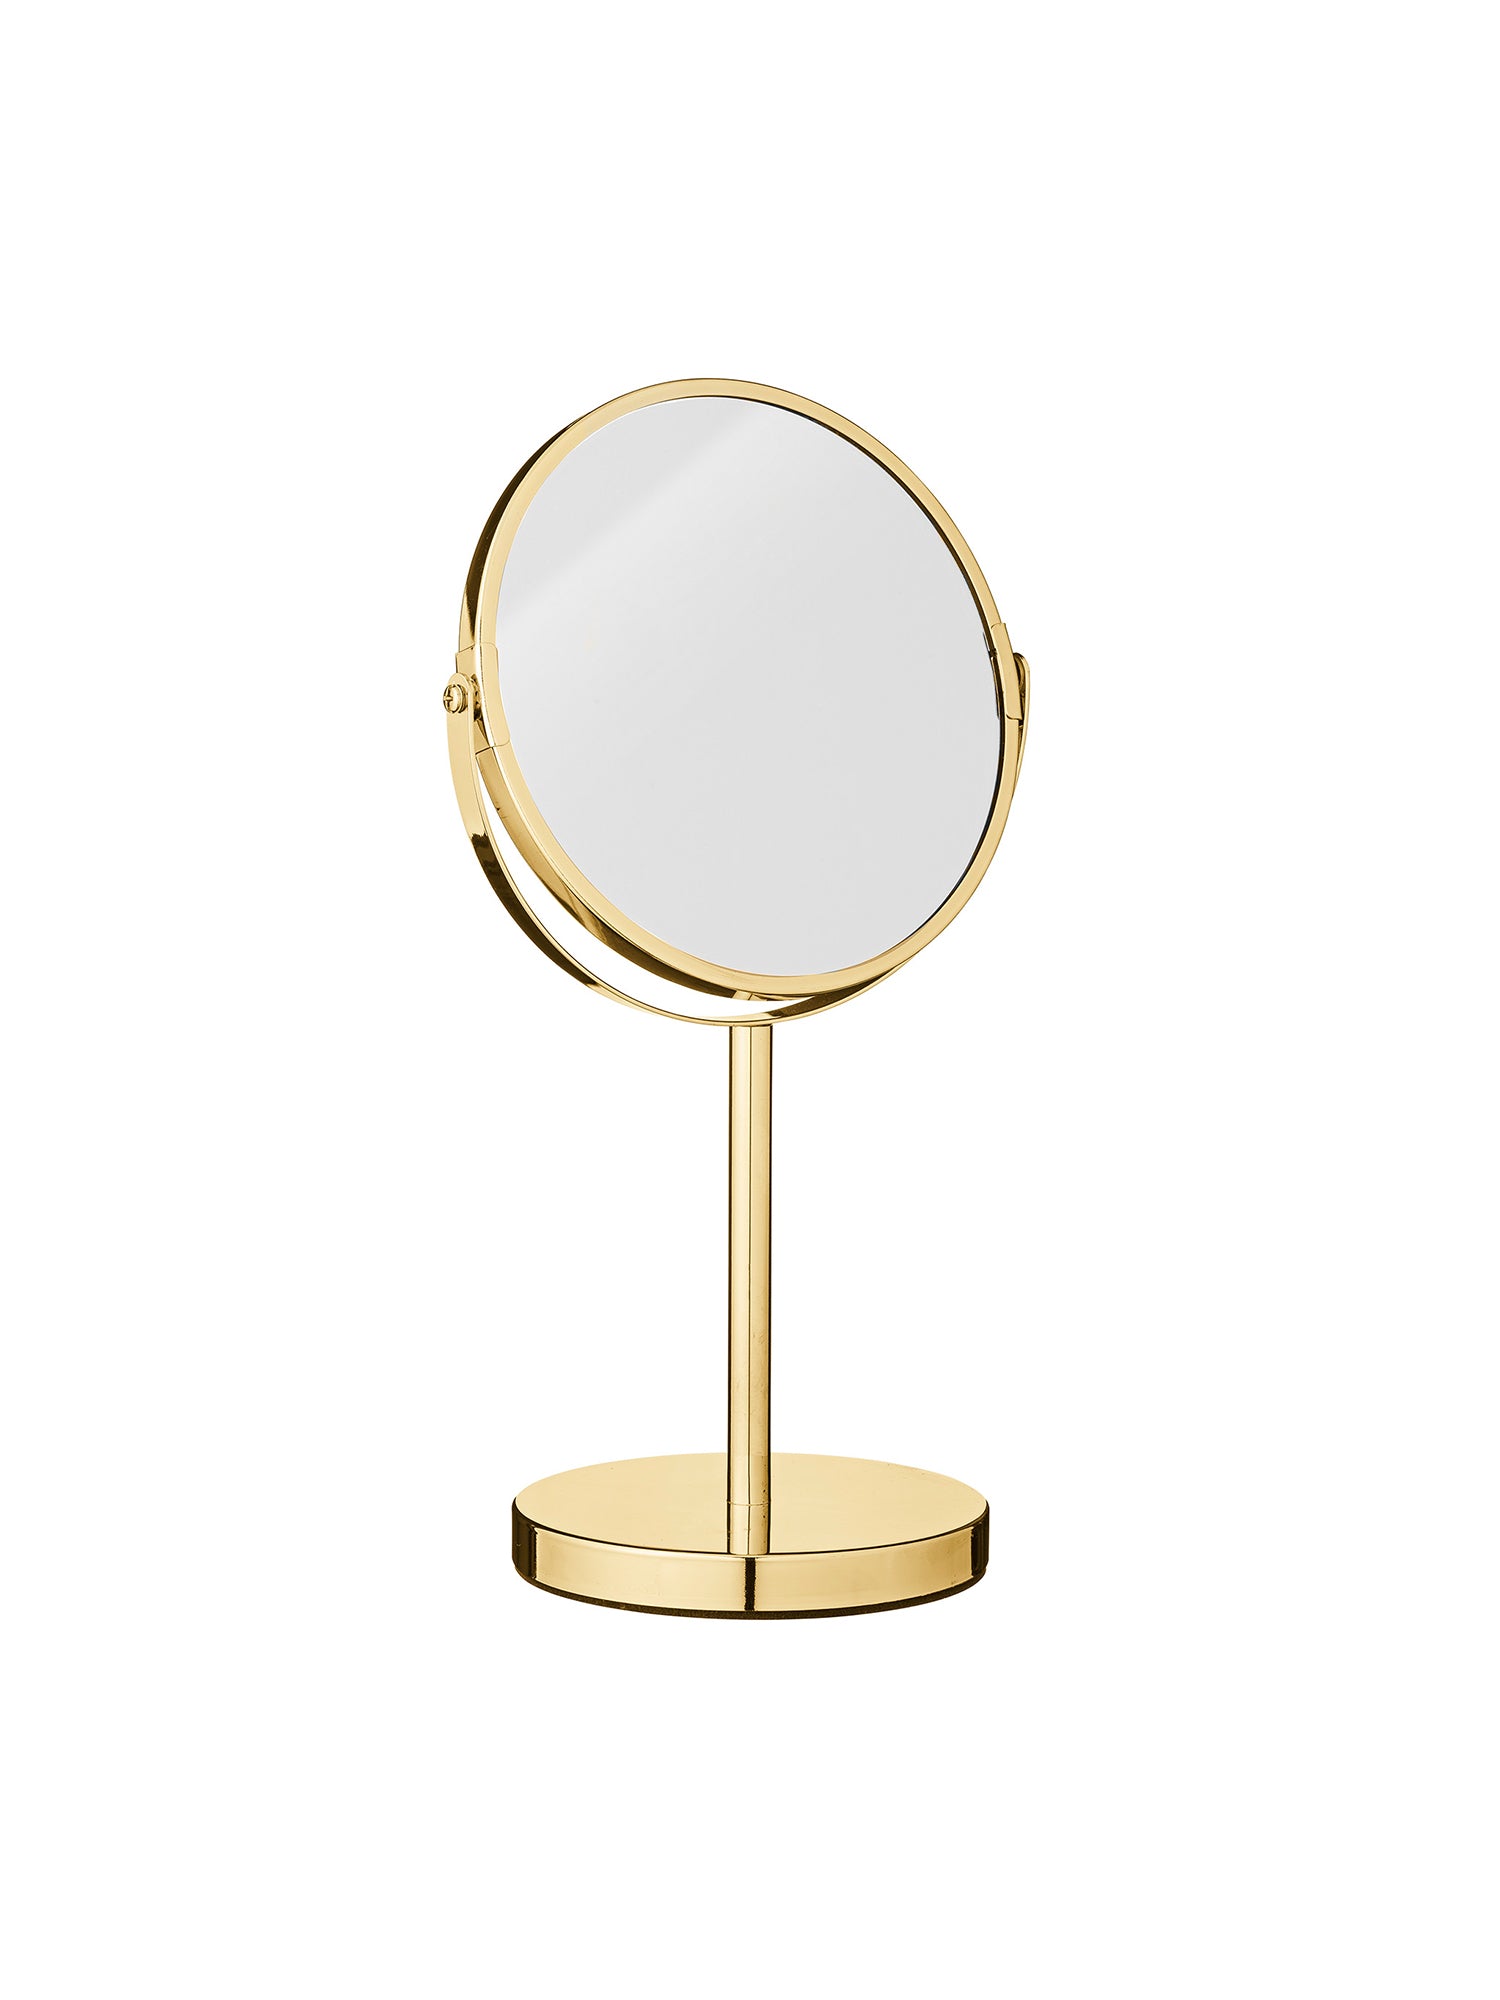 Basic gold Cosmetic Mirror #27168564